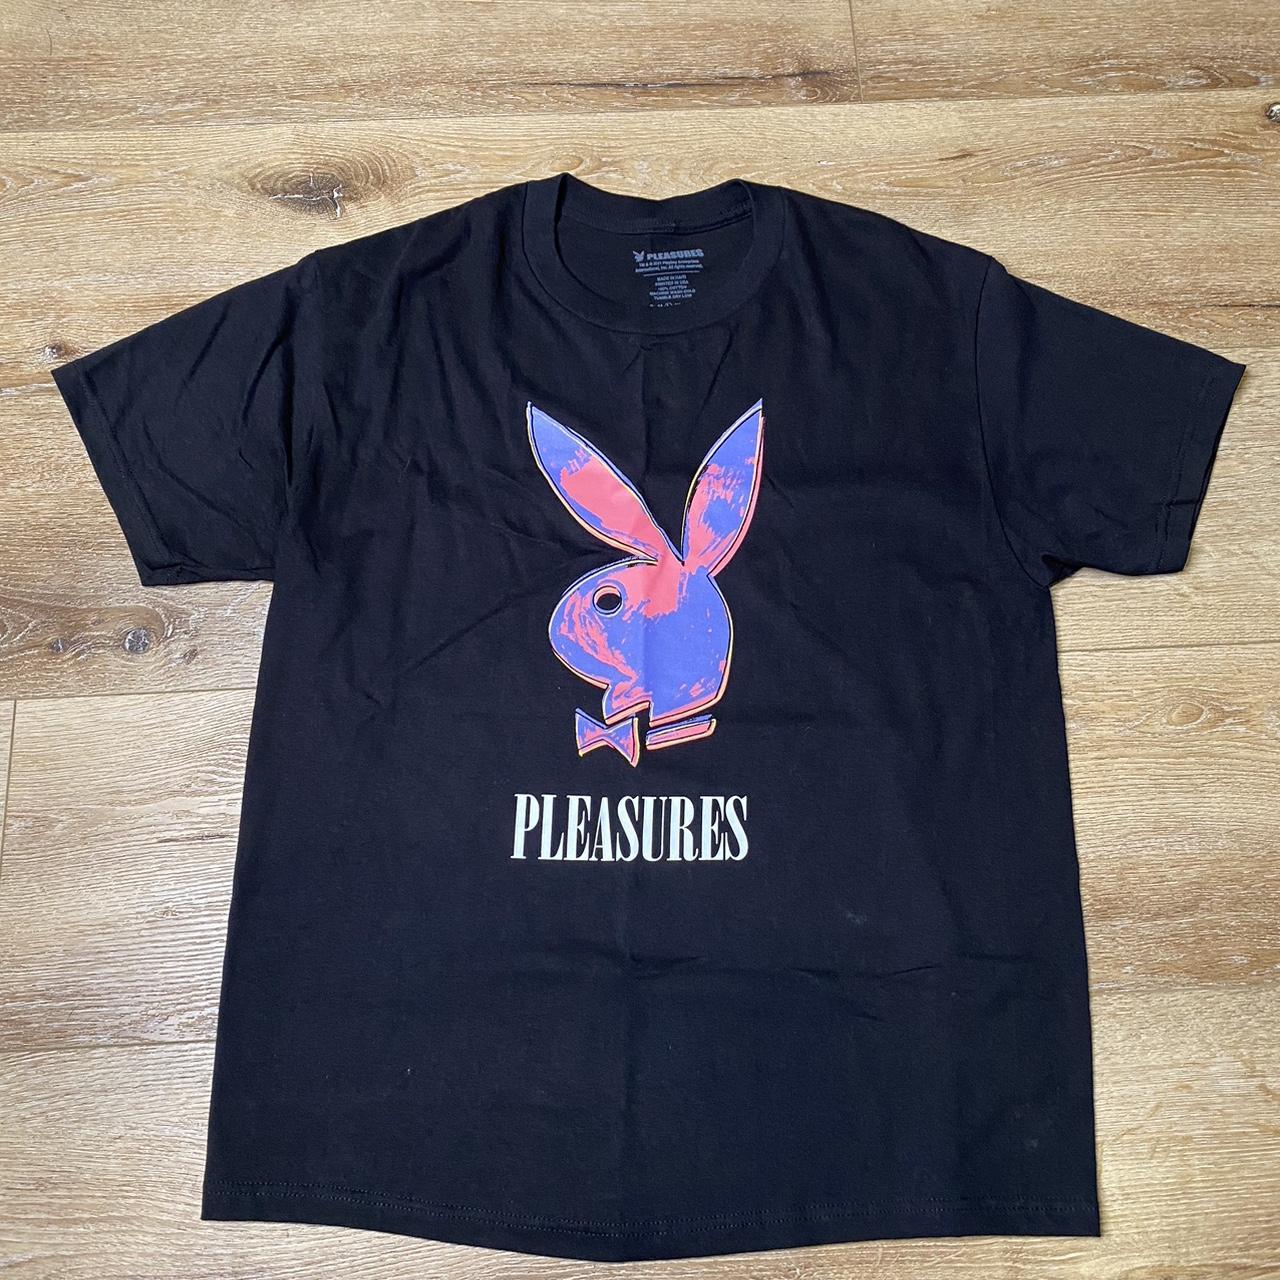 Pleasures Men's Black and Pink T-shirt